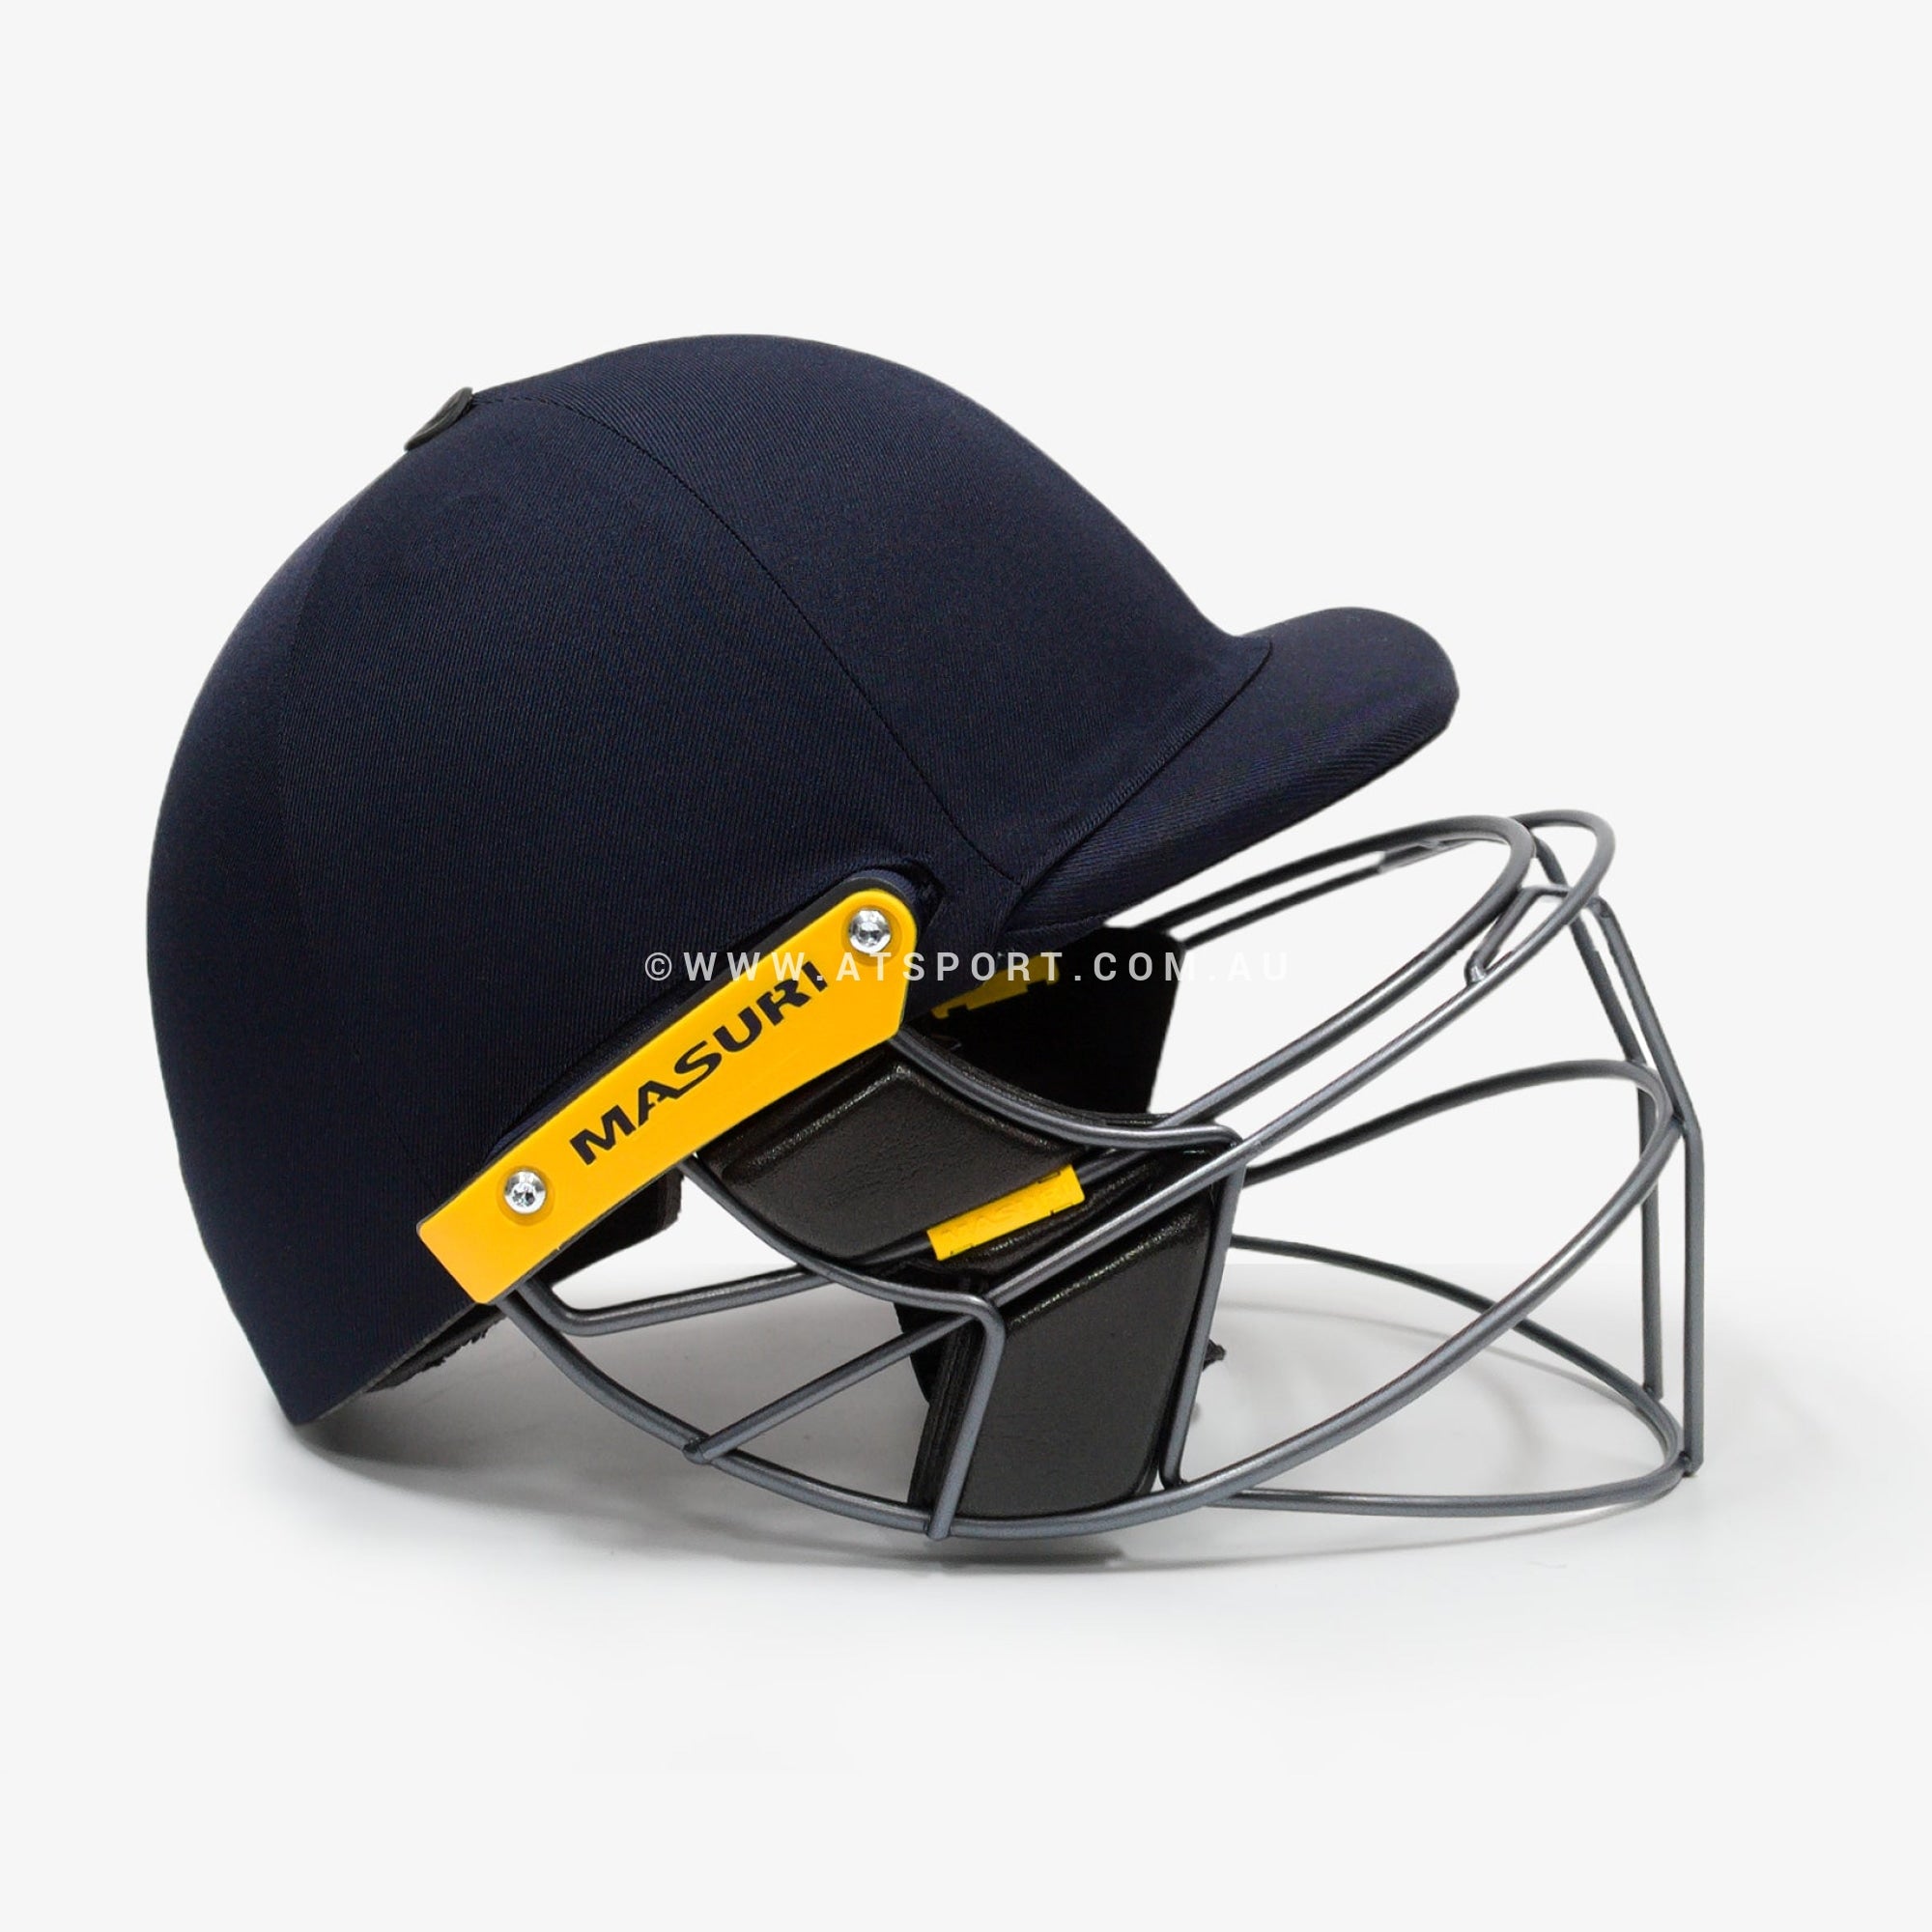 Masuri E LINE Cricket Helmet - CUSTOM LOGO - AT Sports